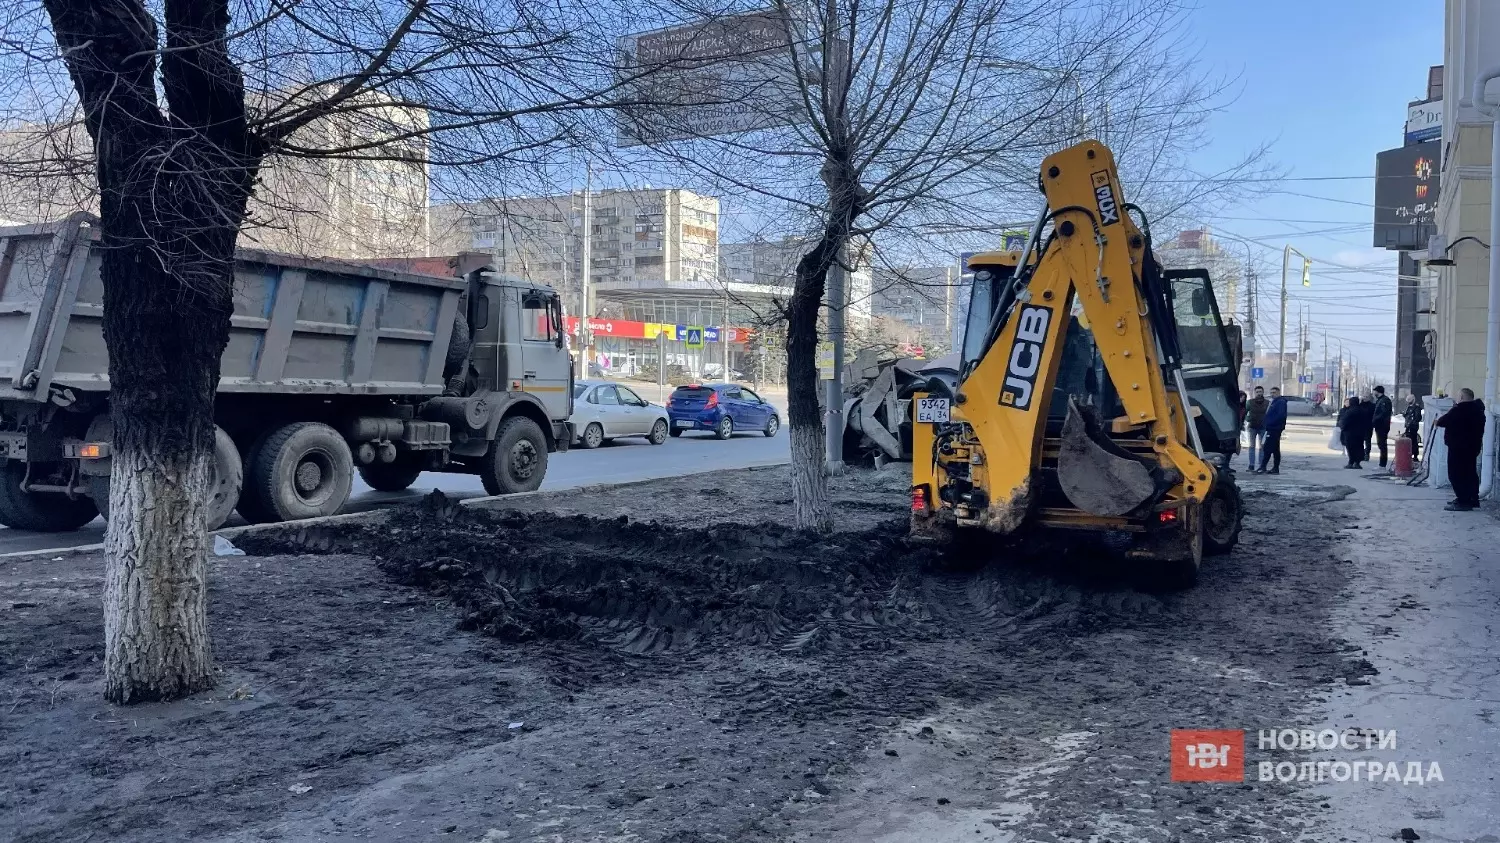 Бетономешалка перевернулась в центре Волгограда